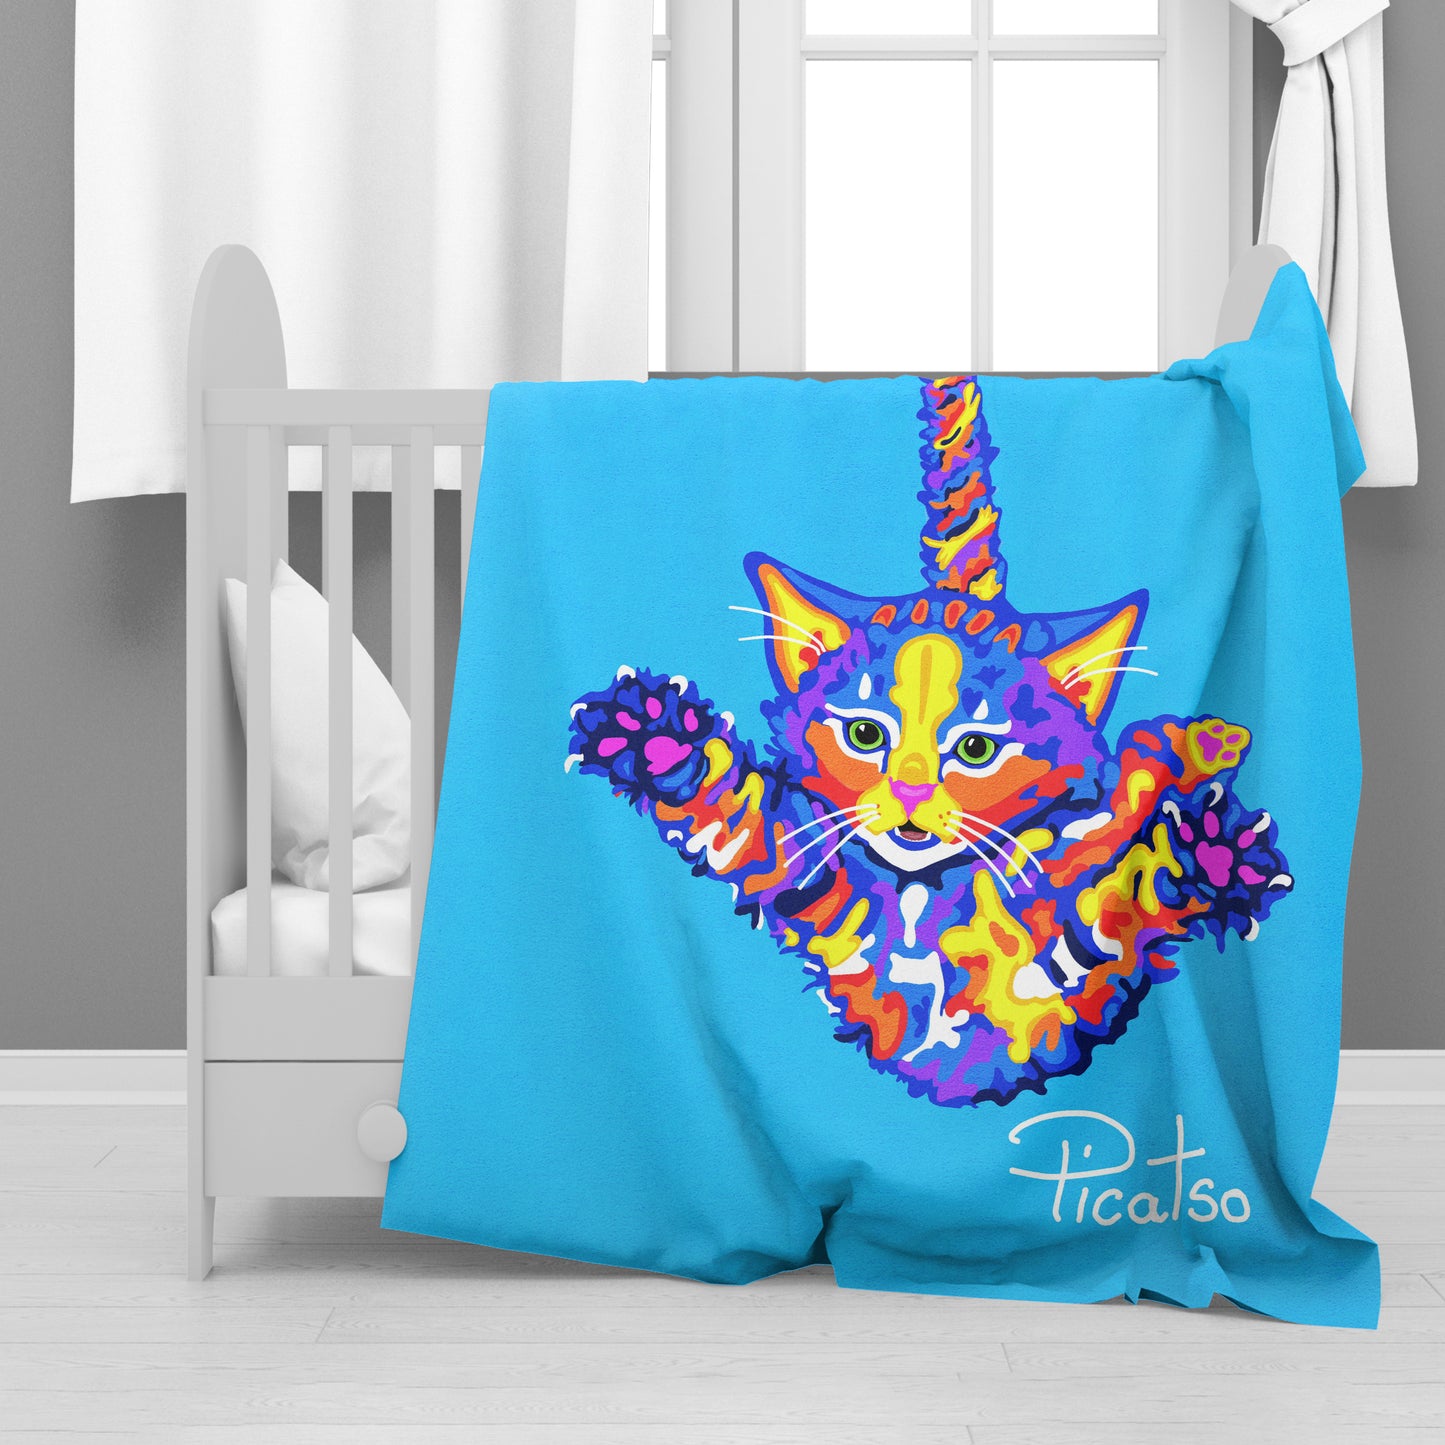 Flying Cat Minky Blanket By Picatso